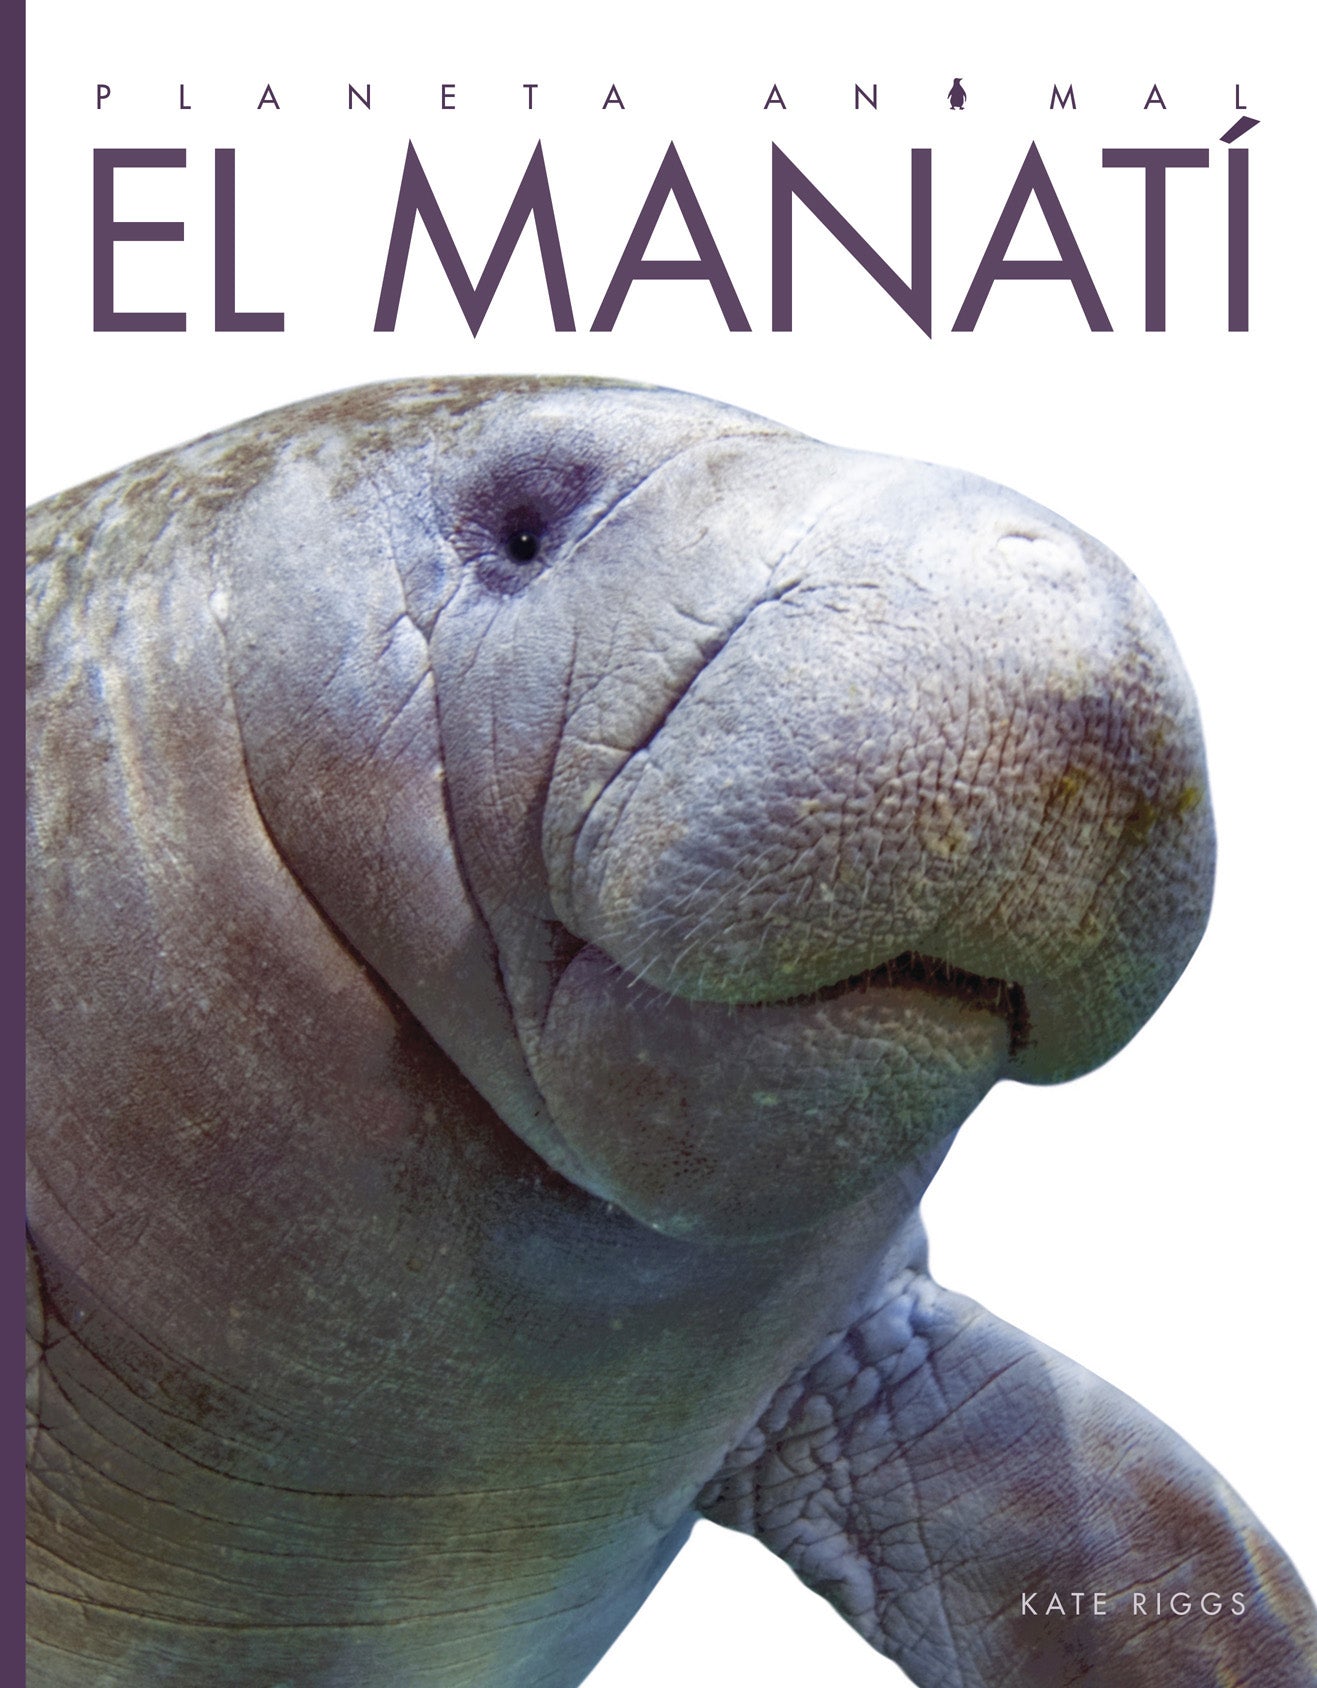 Planeta animal - Classic Edition: El manatí